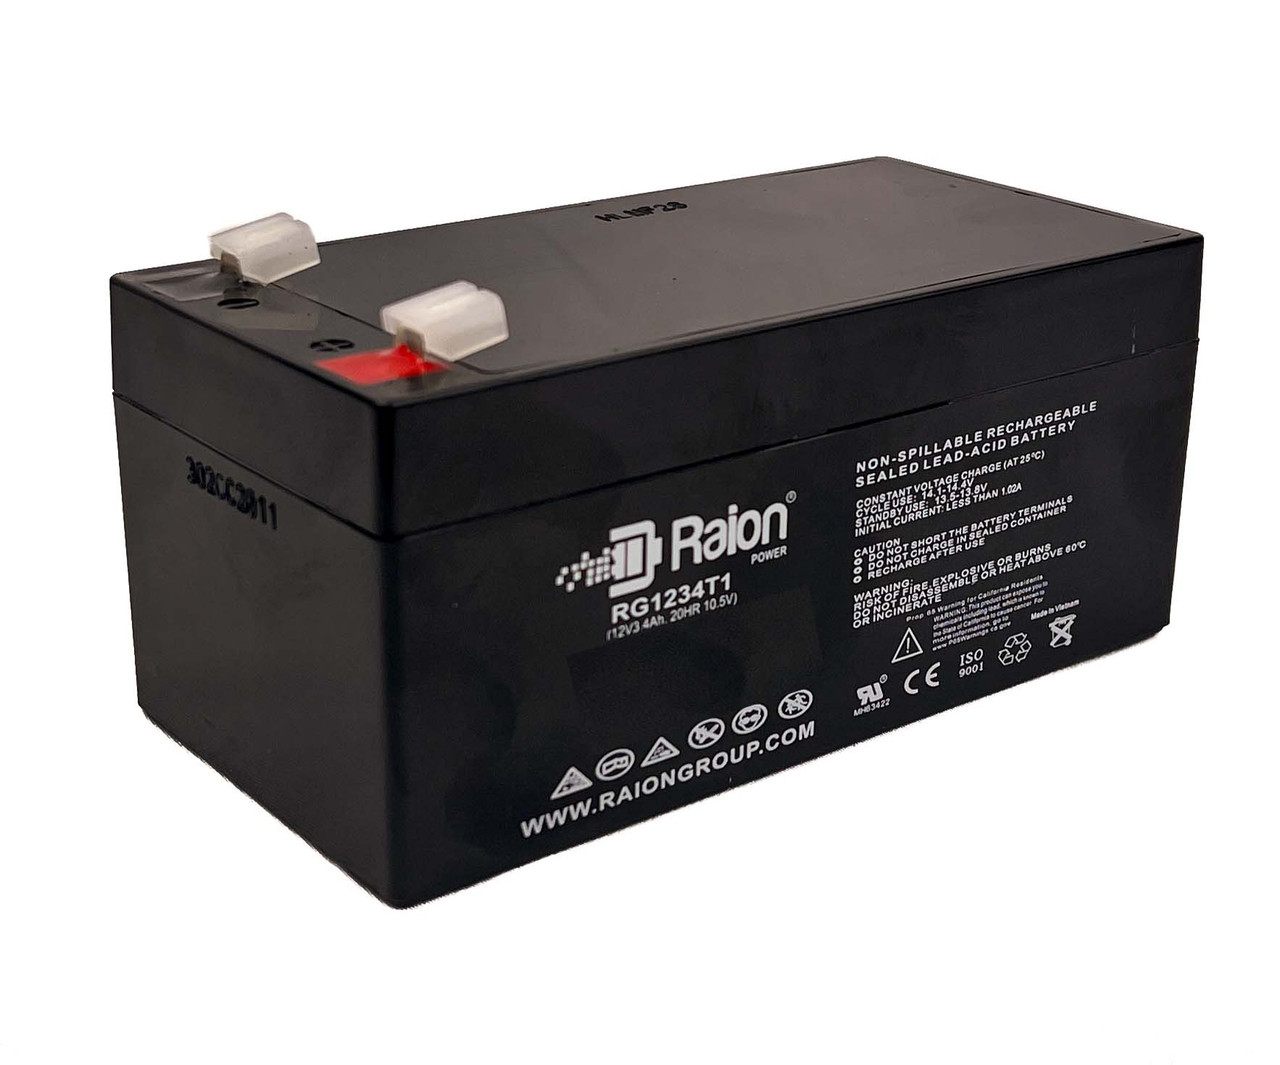 Raion Power 12V 3.4Ah Non-Spillable Replacement Battery for Yuasa NP3.2-12